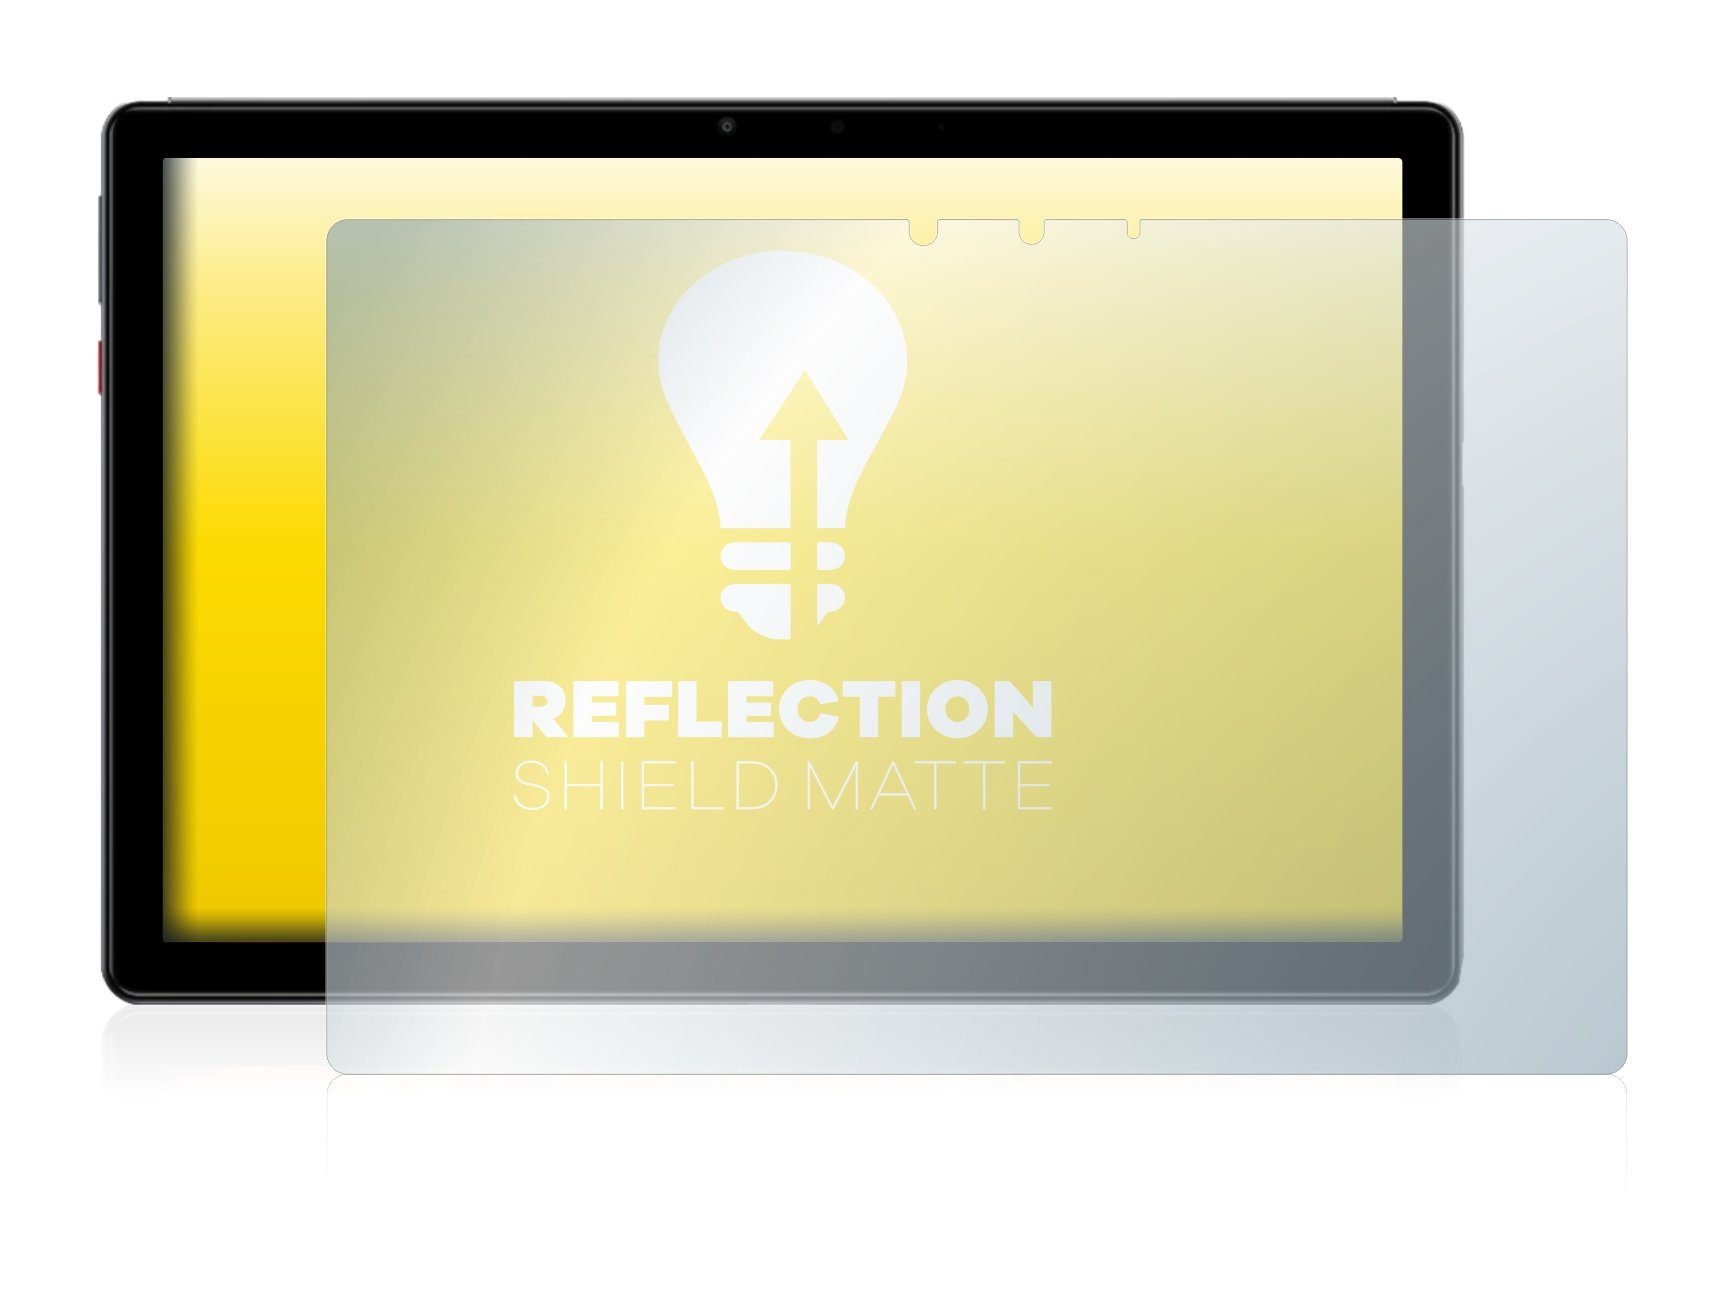 Chuwi upscreen Anti Glare Screen Protector for Chuwi SurPad Reflection Shield Matte 